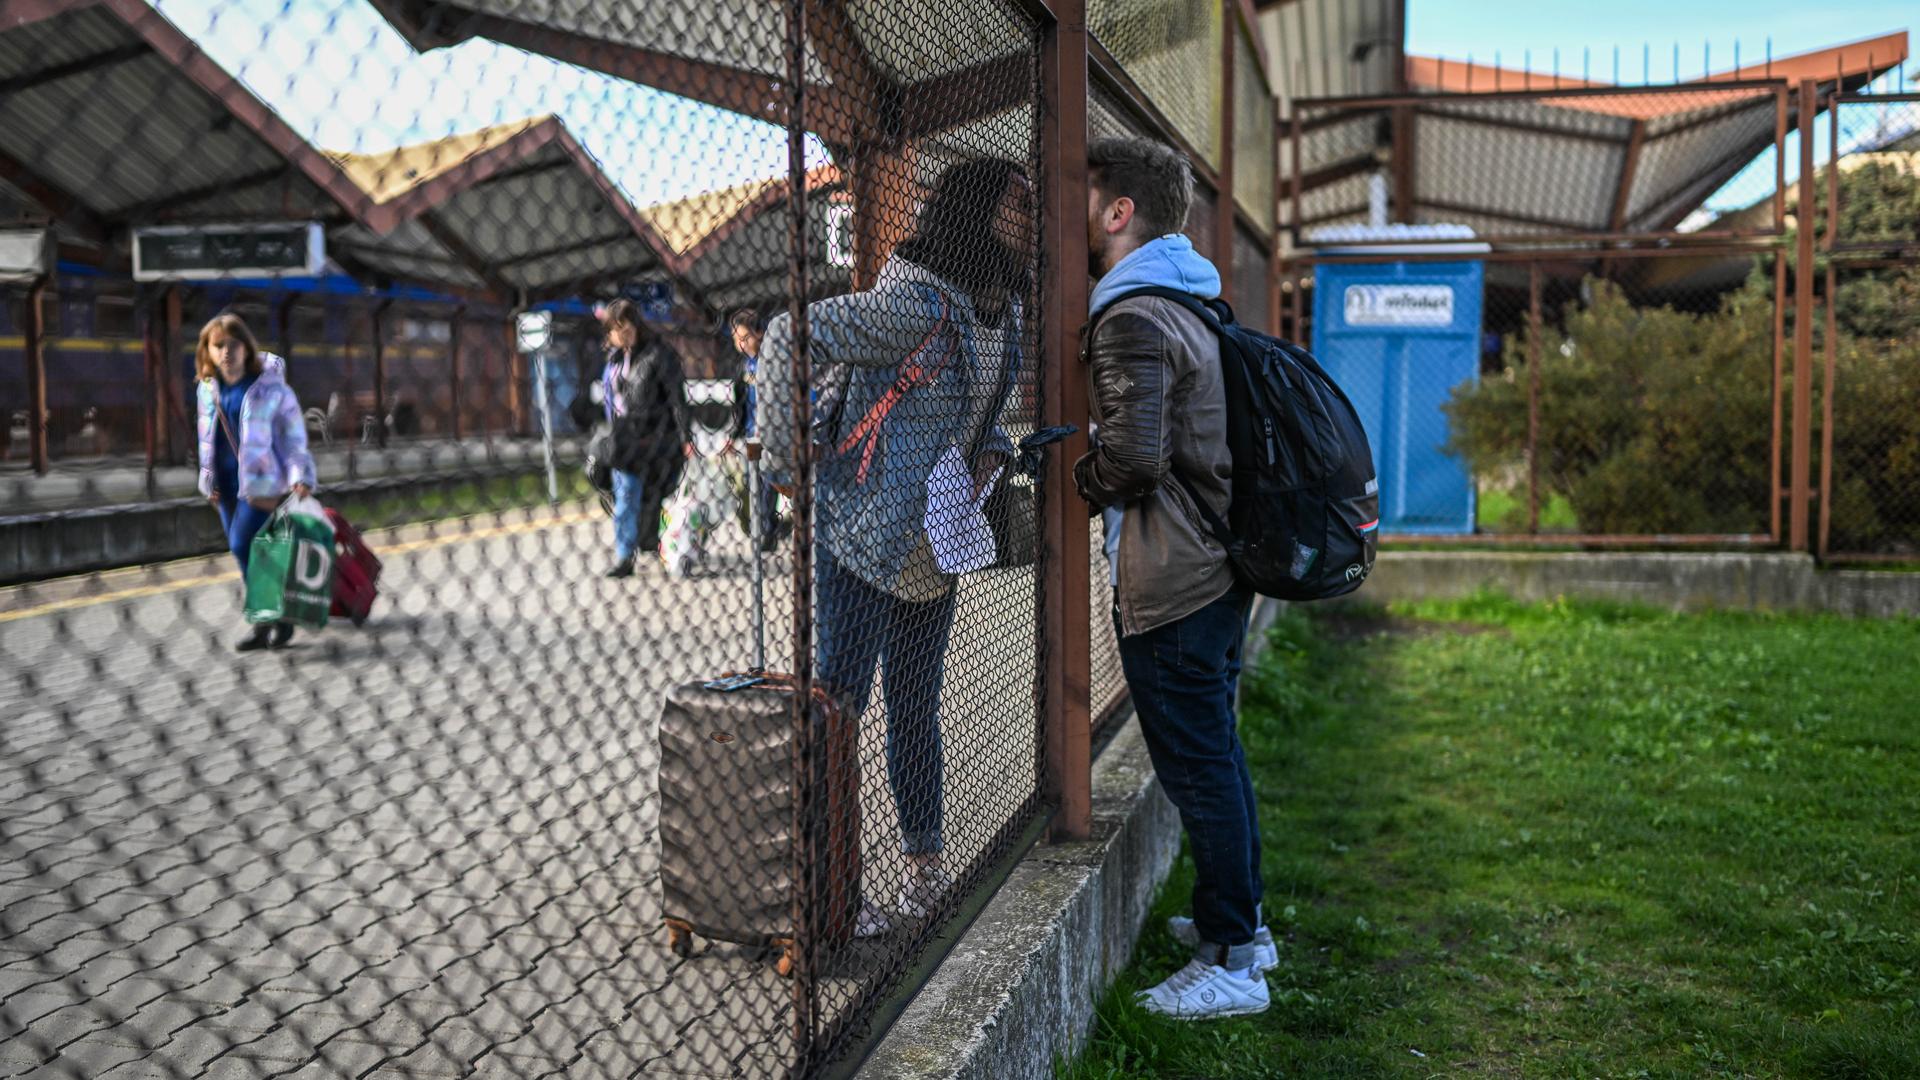 A couple kisses through a fence as she boards a train toward Kyiv at Przemysl train station on Oct. 6, 2022, Przemysl, Poland.